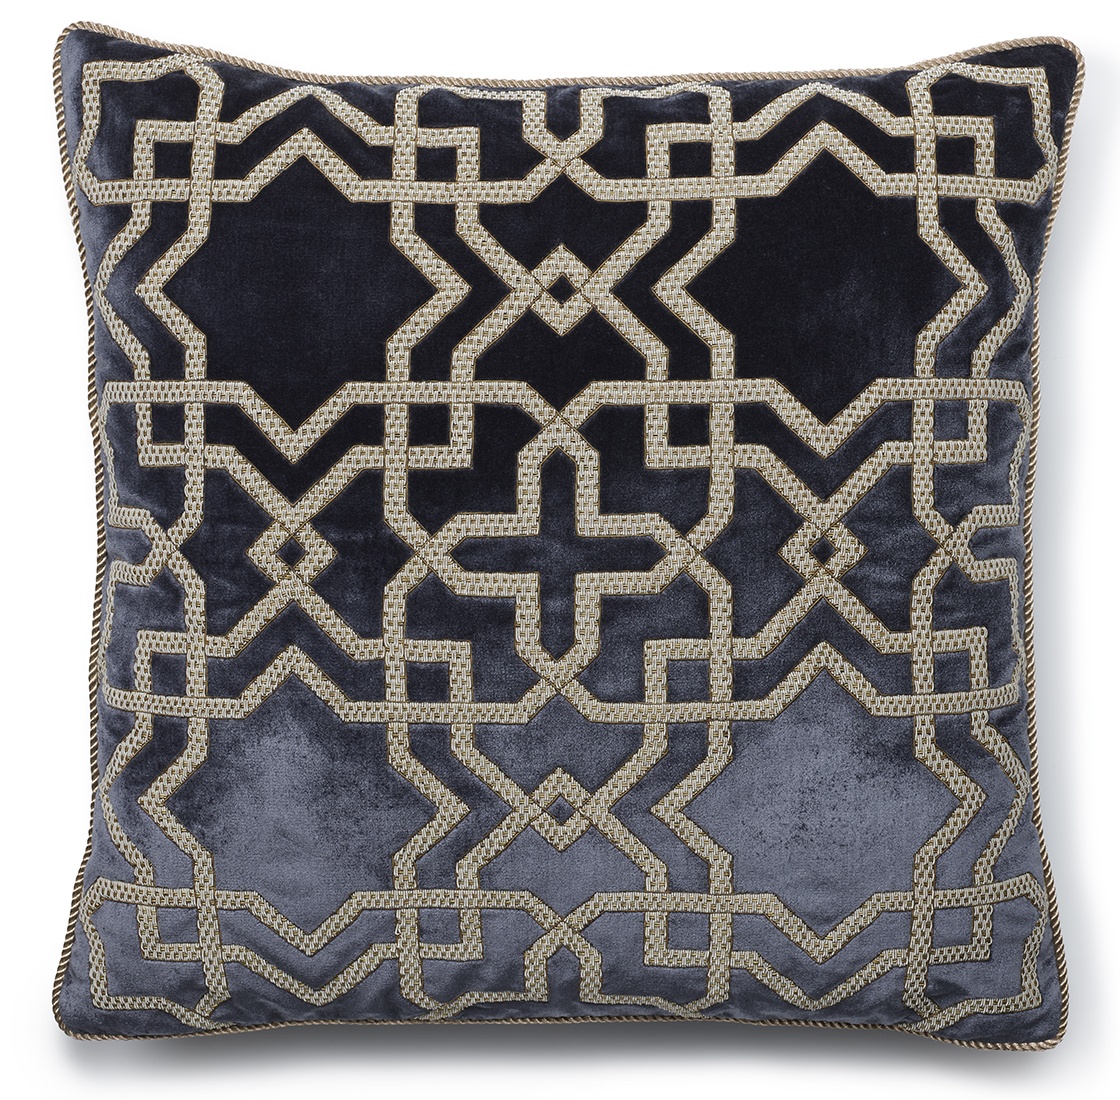 Habibi cushion in Capri silk velvet - Charcoal